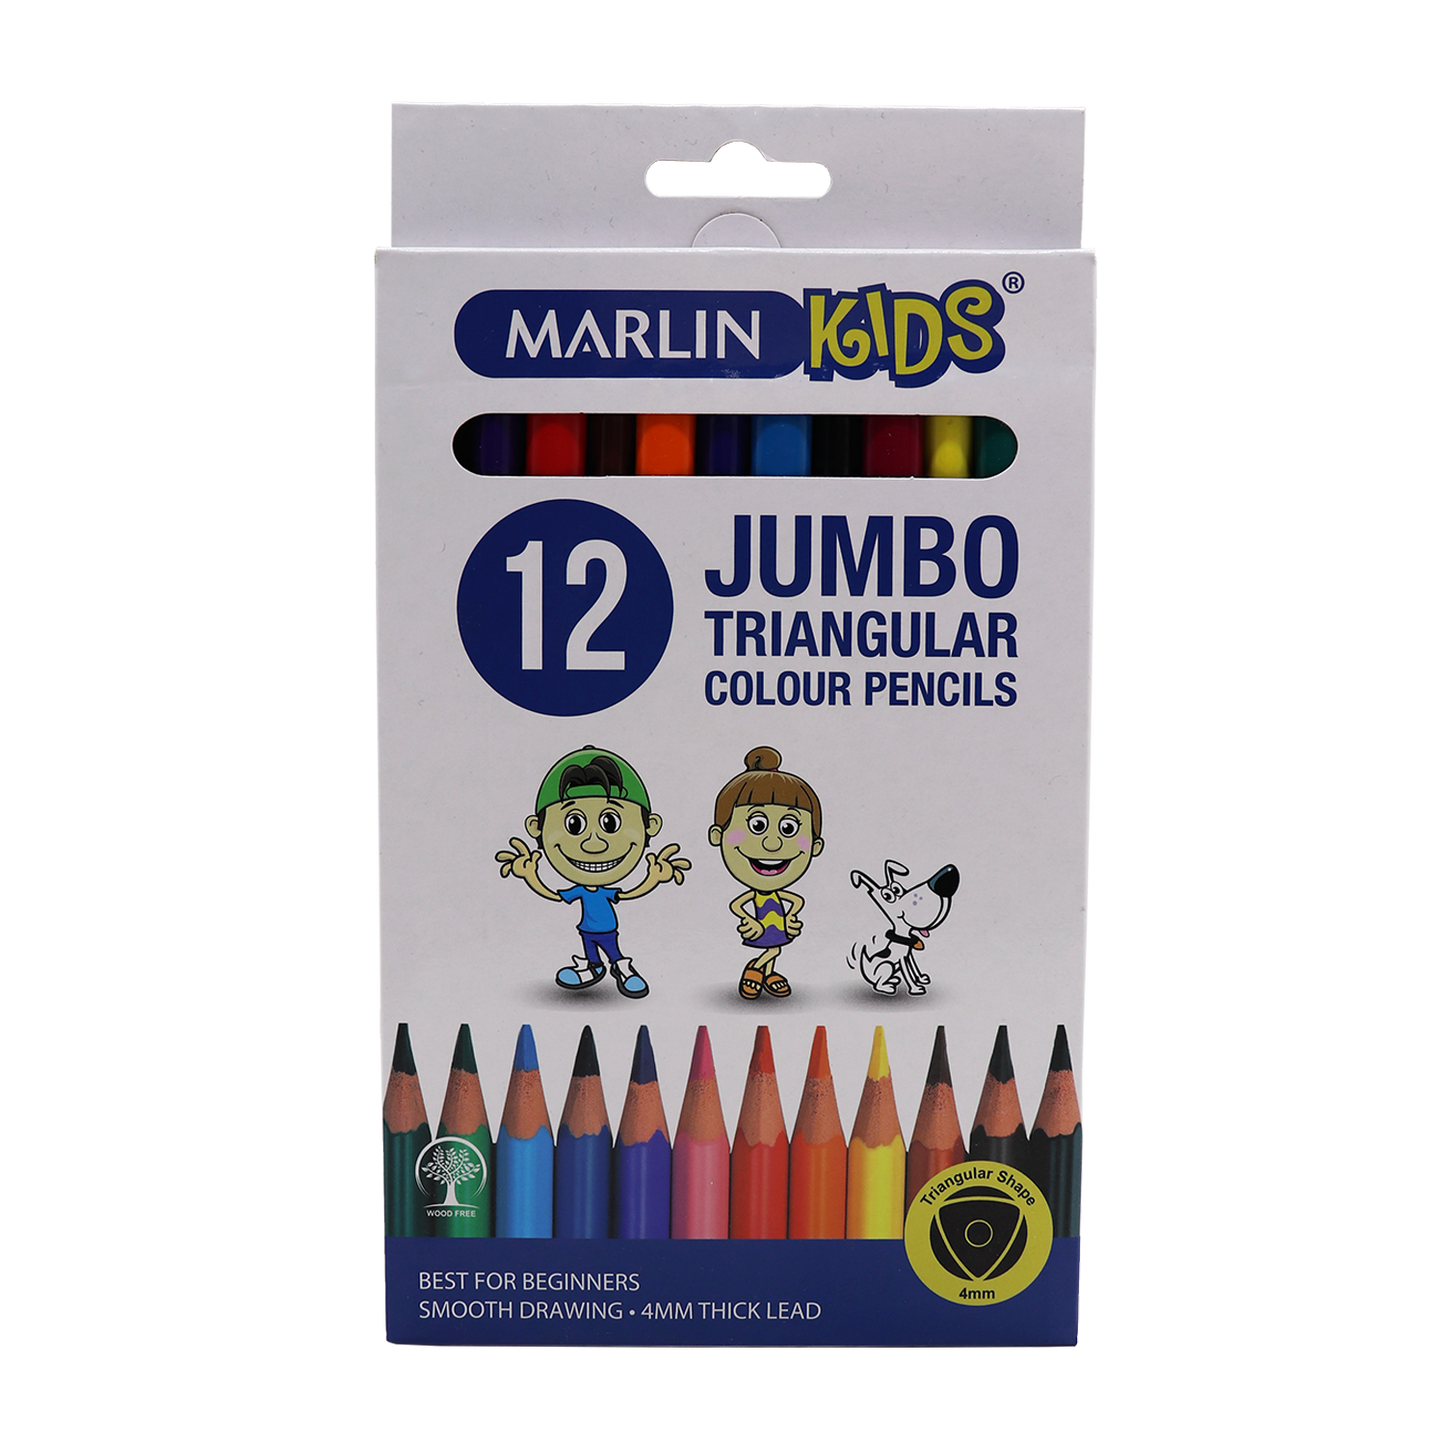 Marlin Kids Tri Jumbo Triangular Colour Pencils (12 Packs of 12 Pencils)